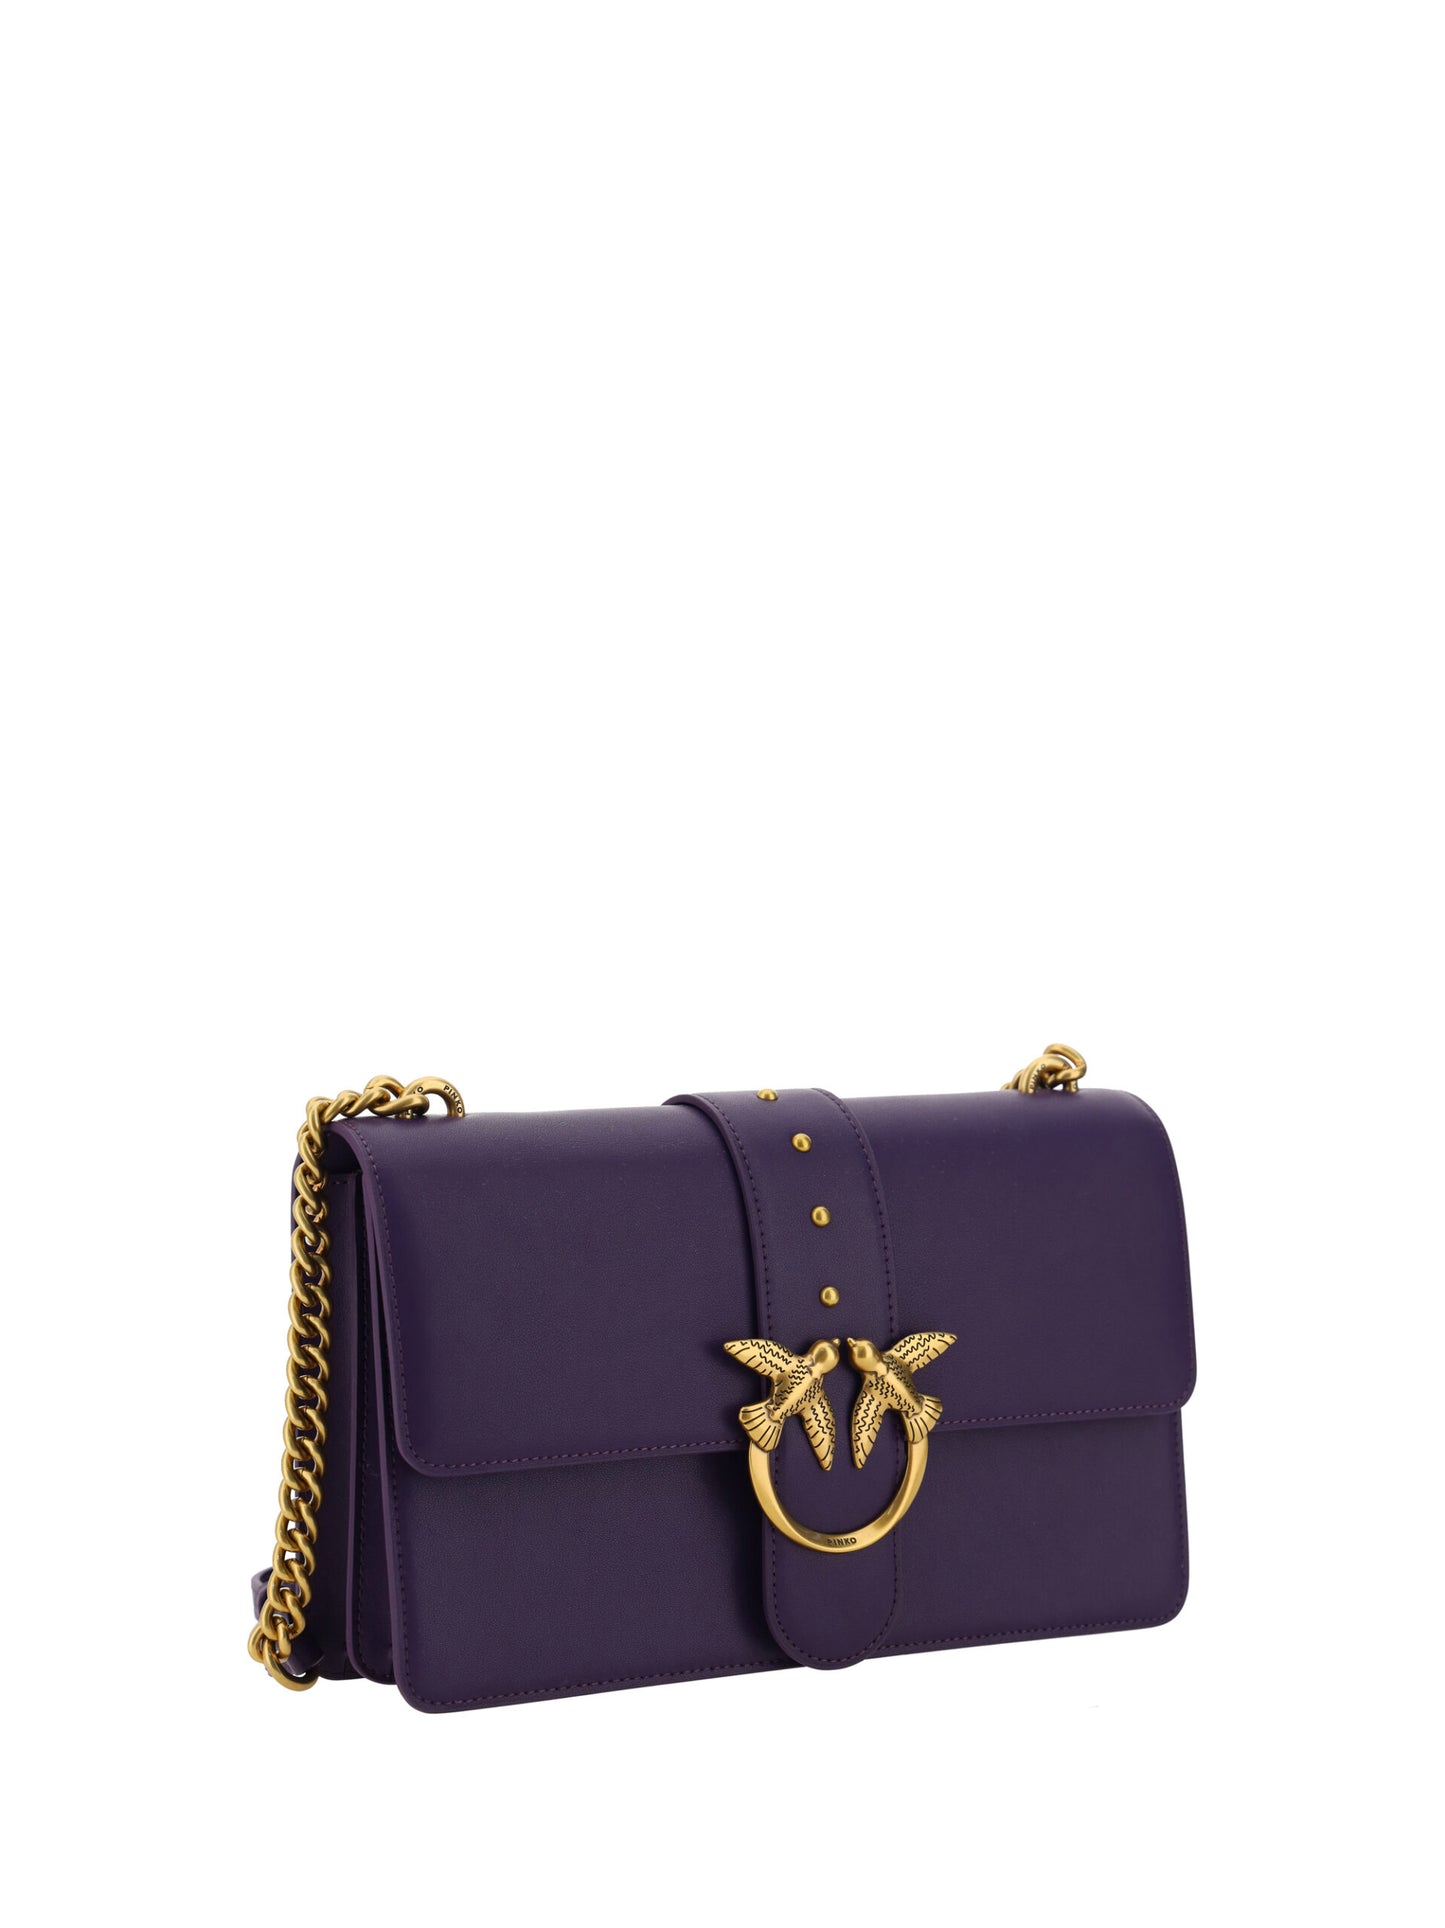 PINKO Purple Leather Love One Classic Shoulder Bag